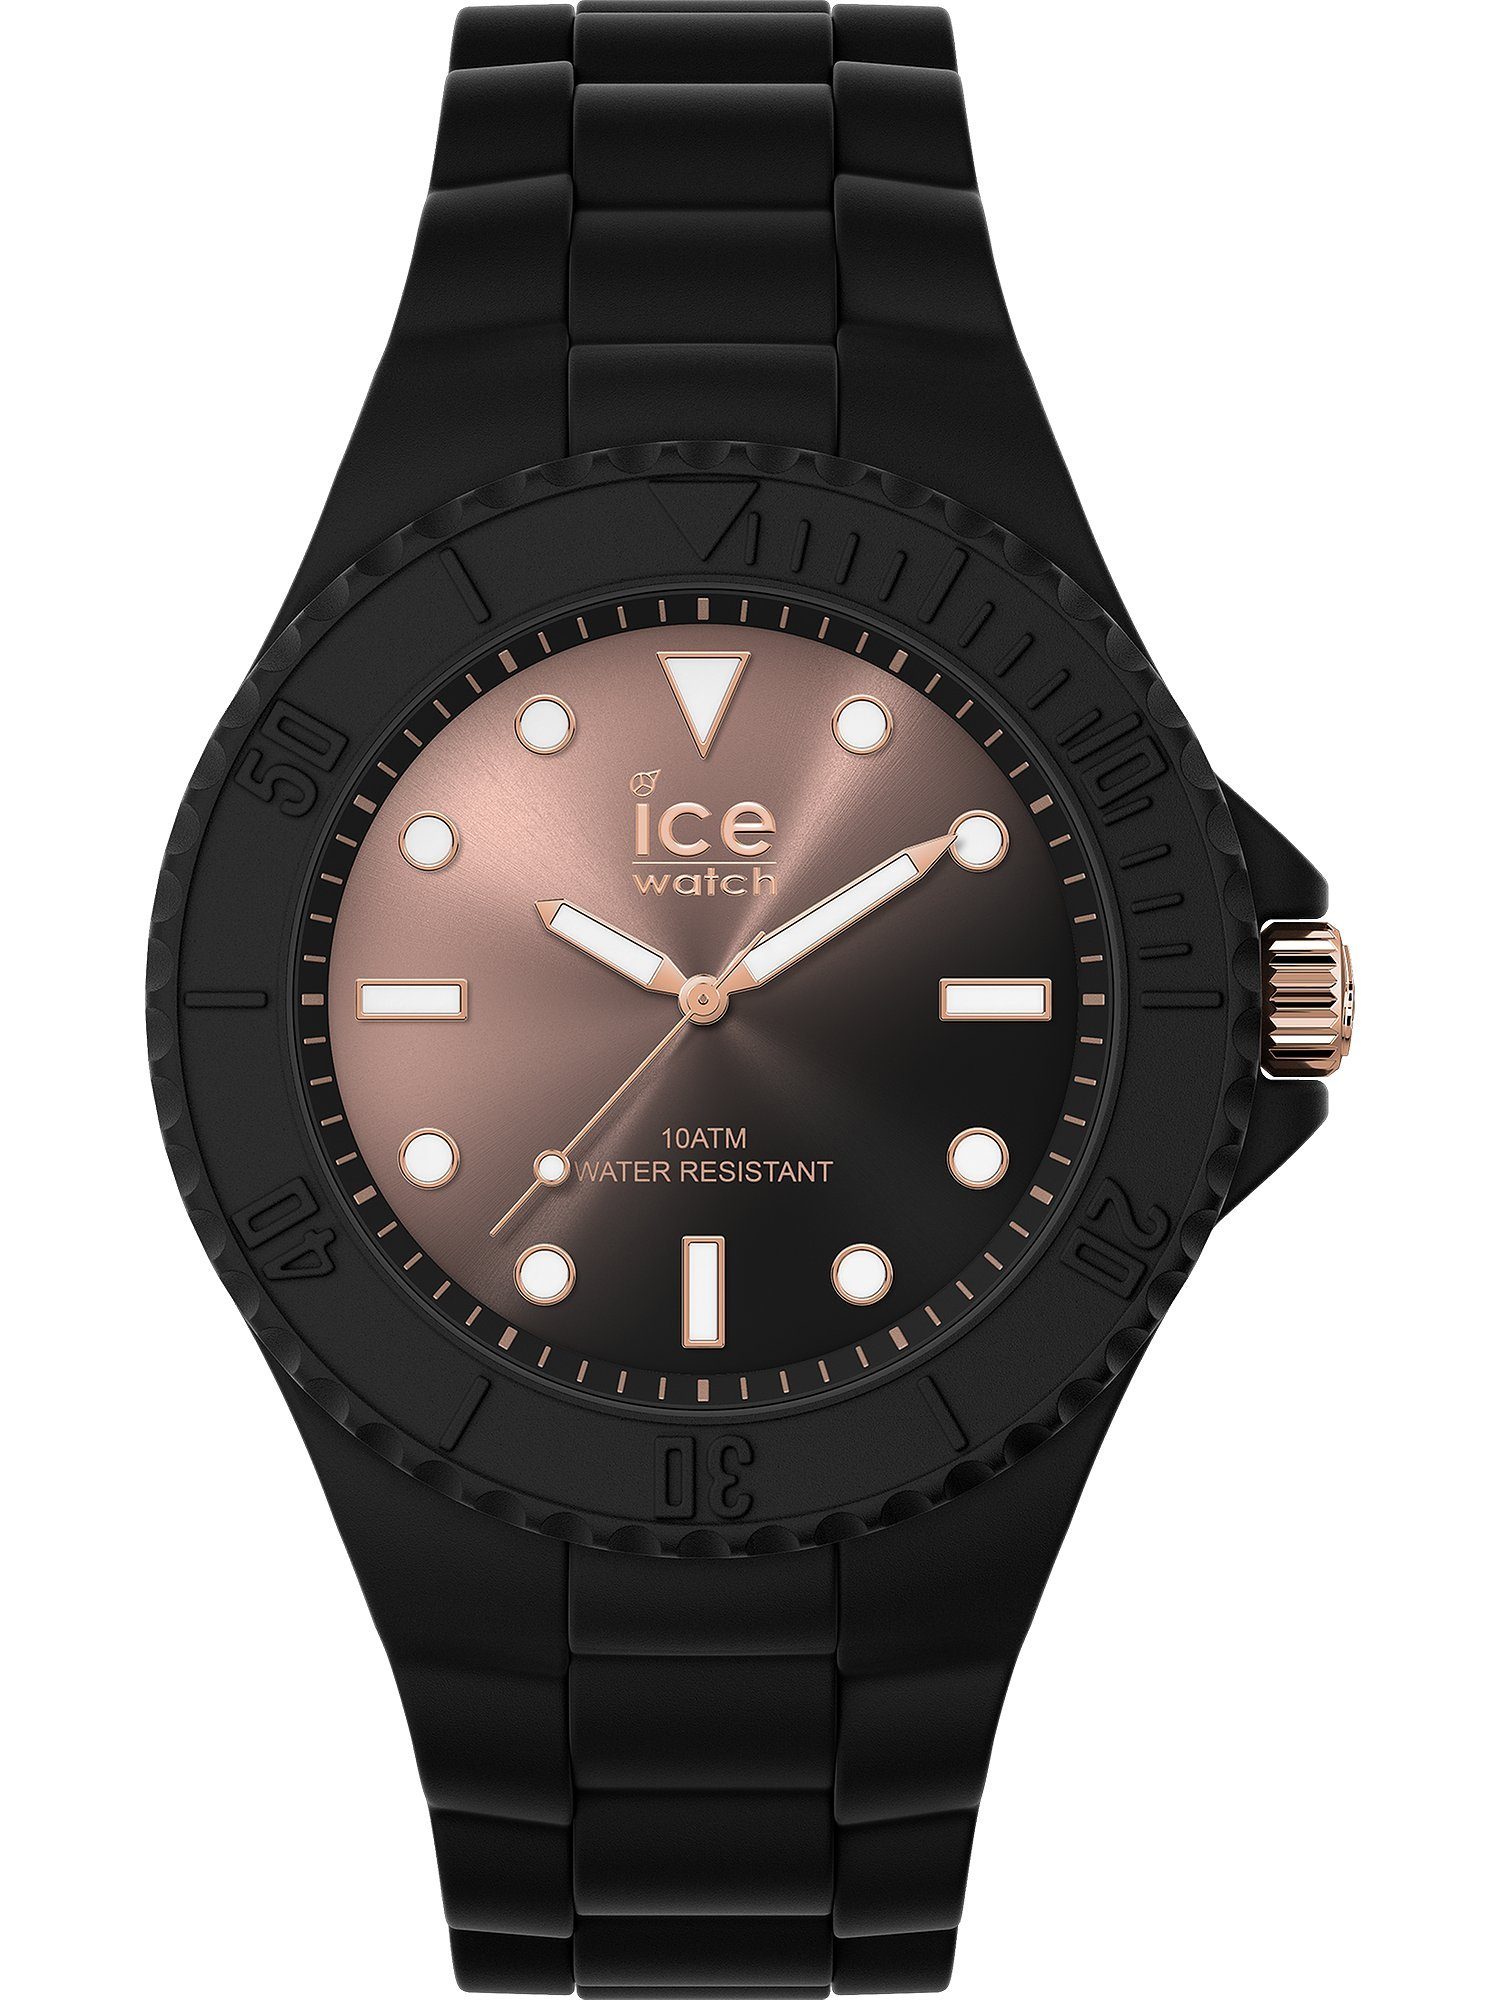 ICE Kunststoff Material: Quarz, Klassikuhr, Herren-Uhren Analog Quarzuhr Watch ice-watch